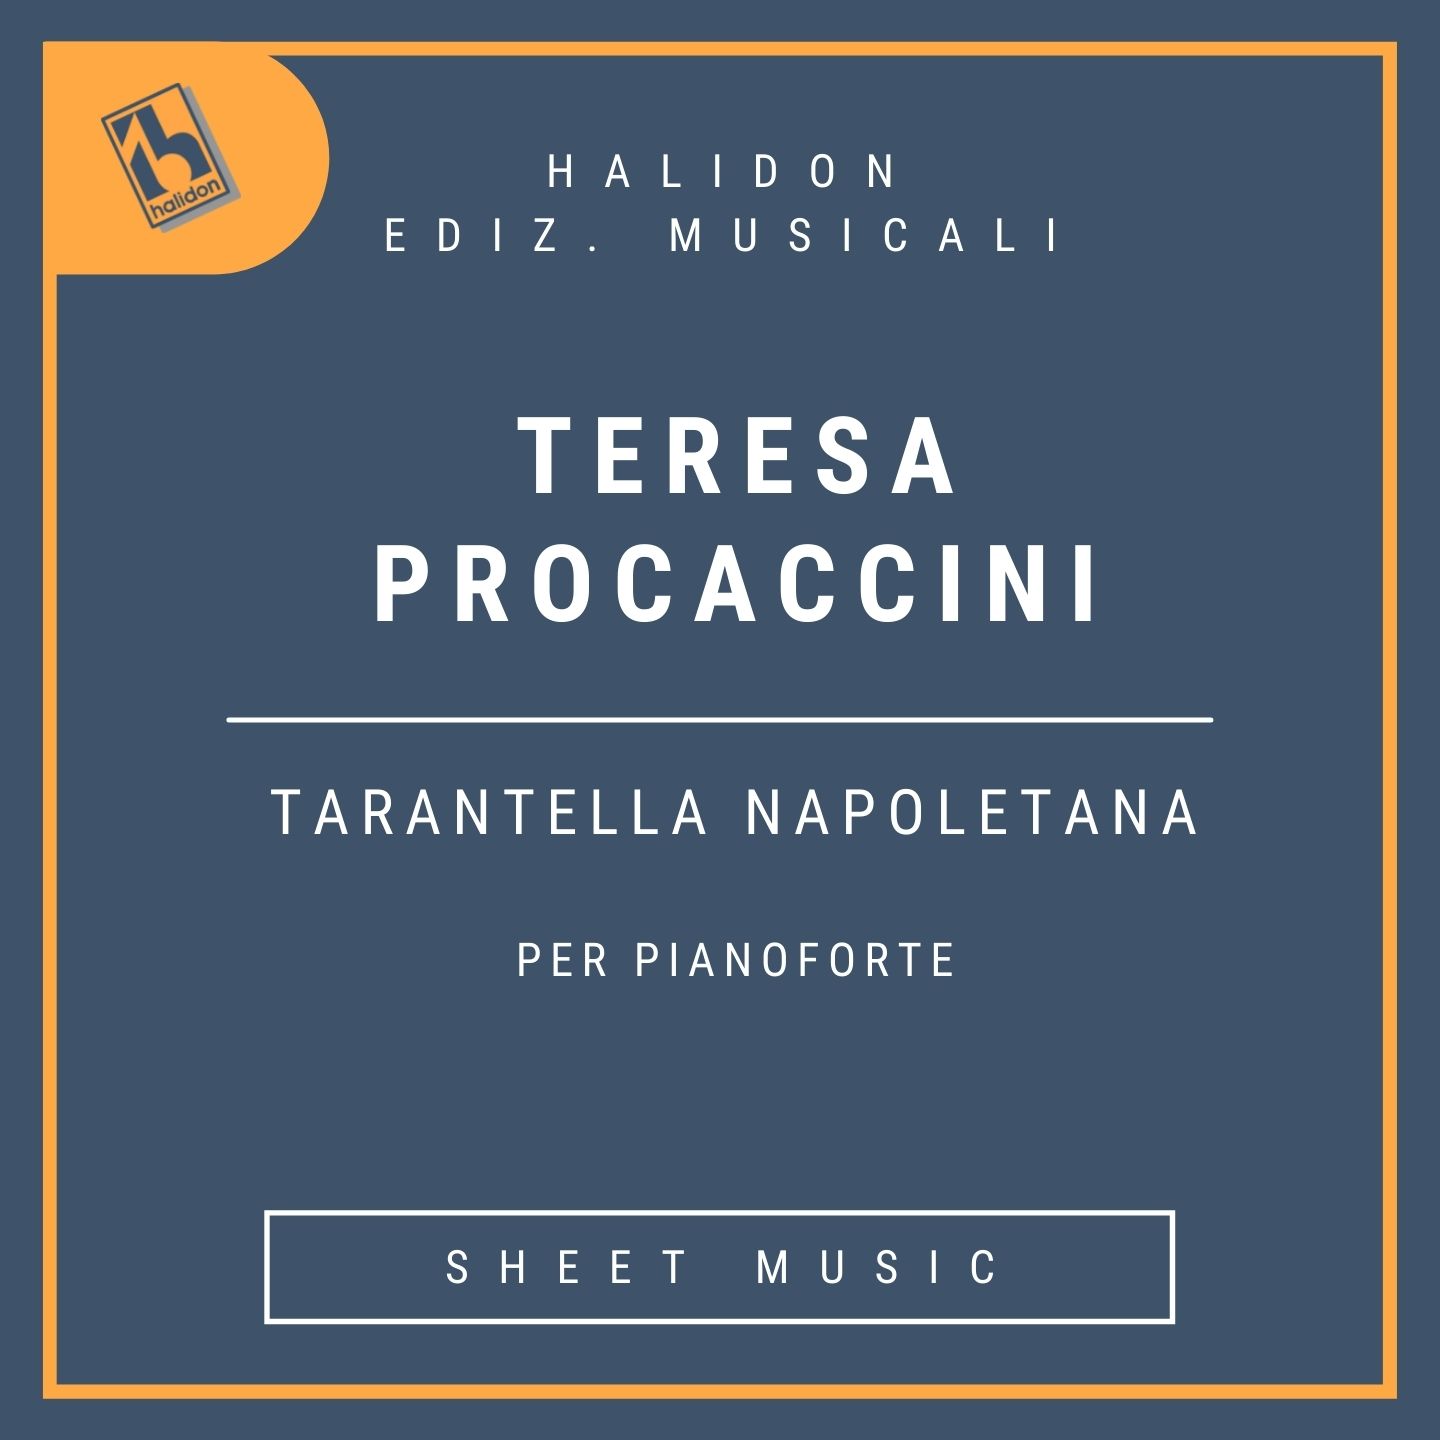 Teresa Procaccini - Tarantella napoletana